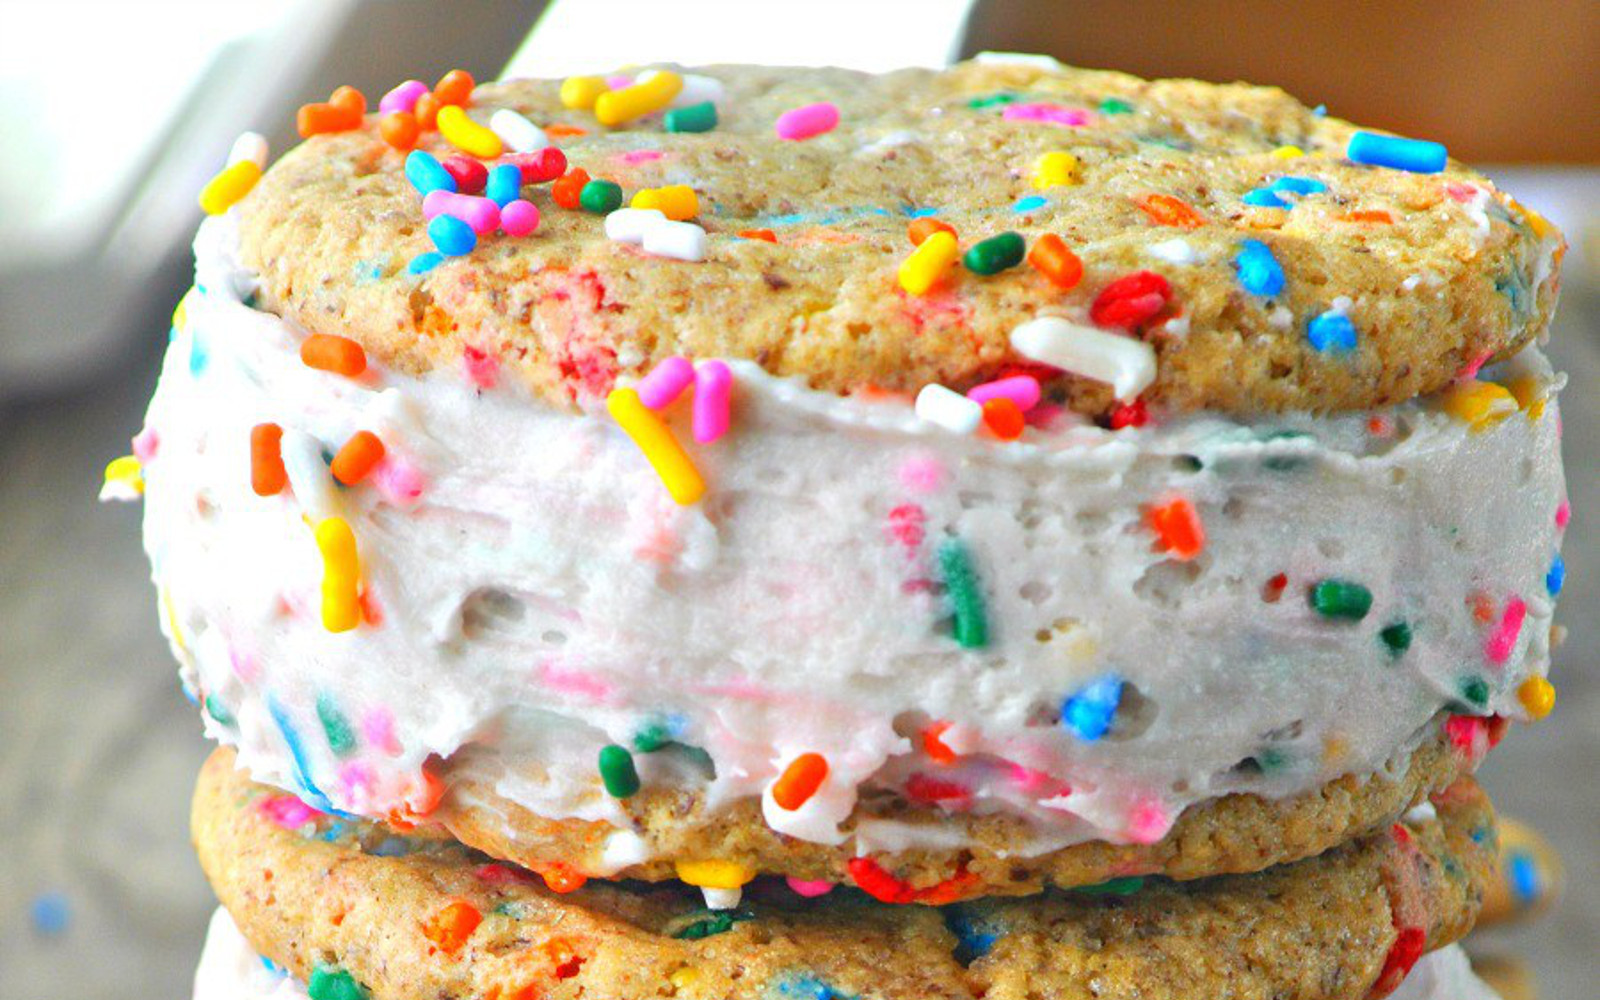 Best ideas about Birthday Cake Ice Cream Recipe
. Save or Pin Birthday Cake Ice Cream Sandwiches [Vegan] Now.